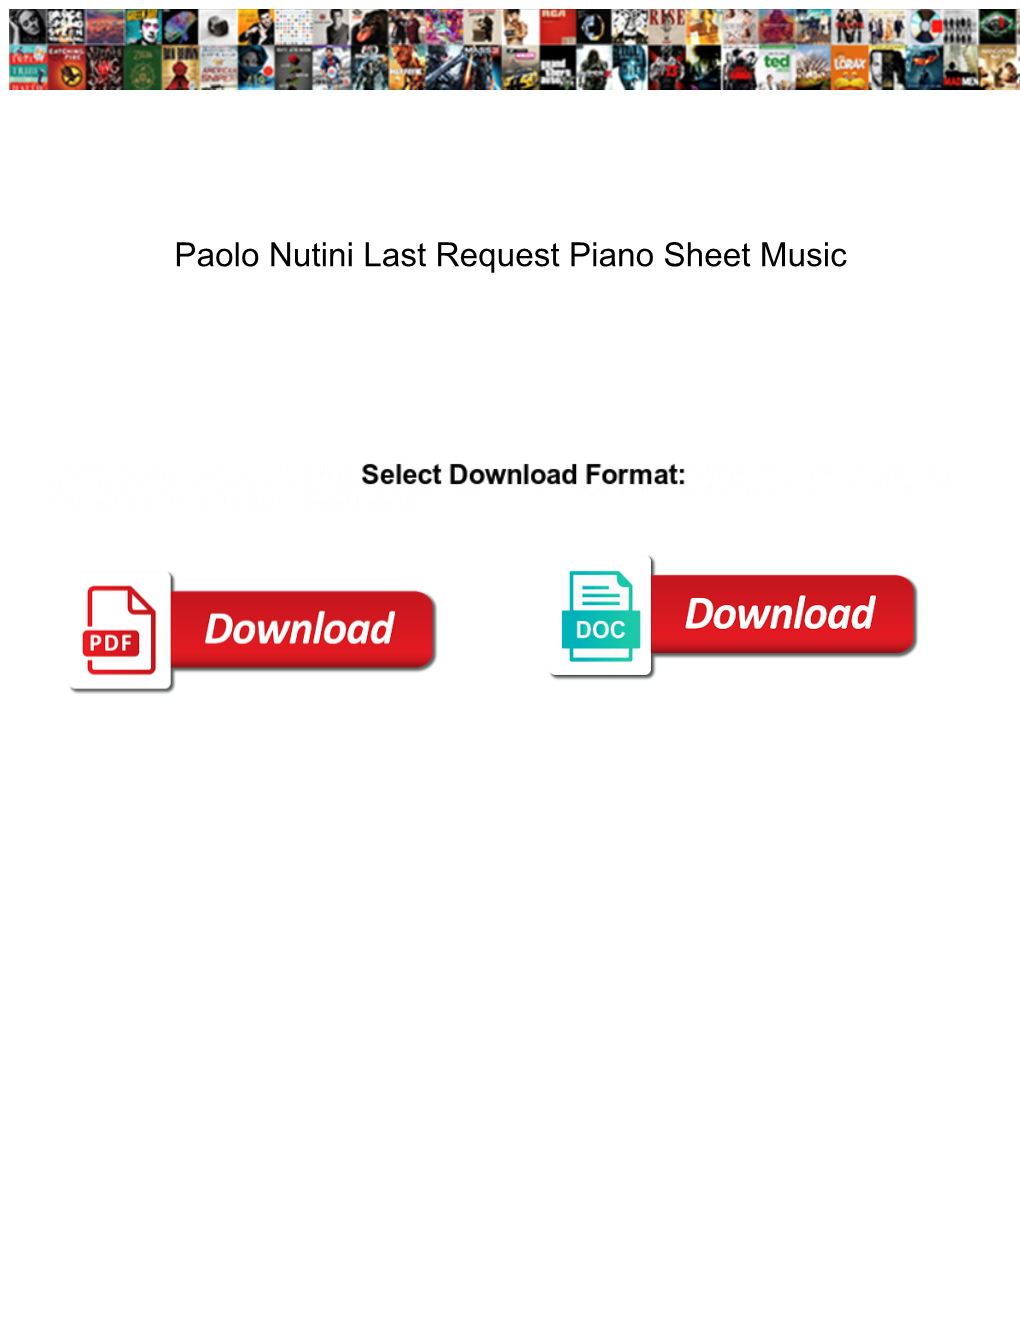 Paolo Nutini Last Request Piano Sheet Music